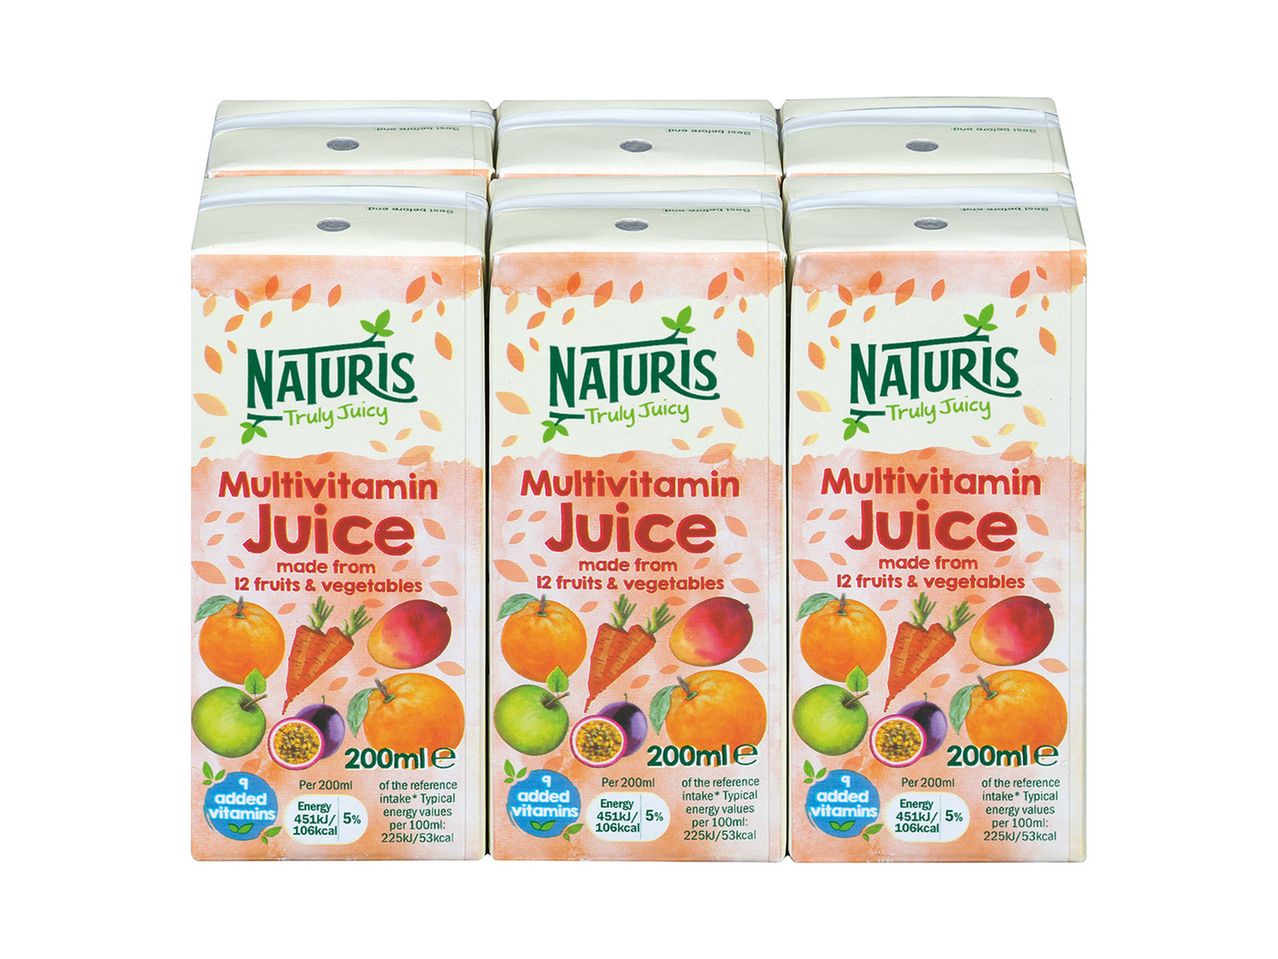 Go to full screen view: Naturis Multivitamin Juice - Image 1